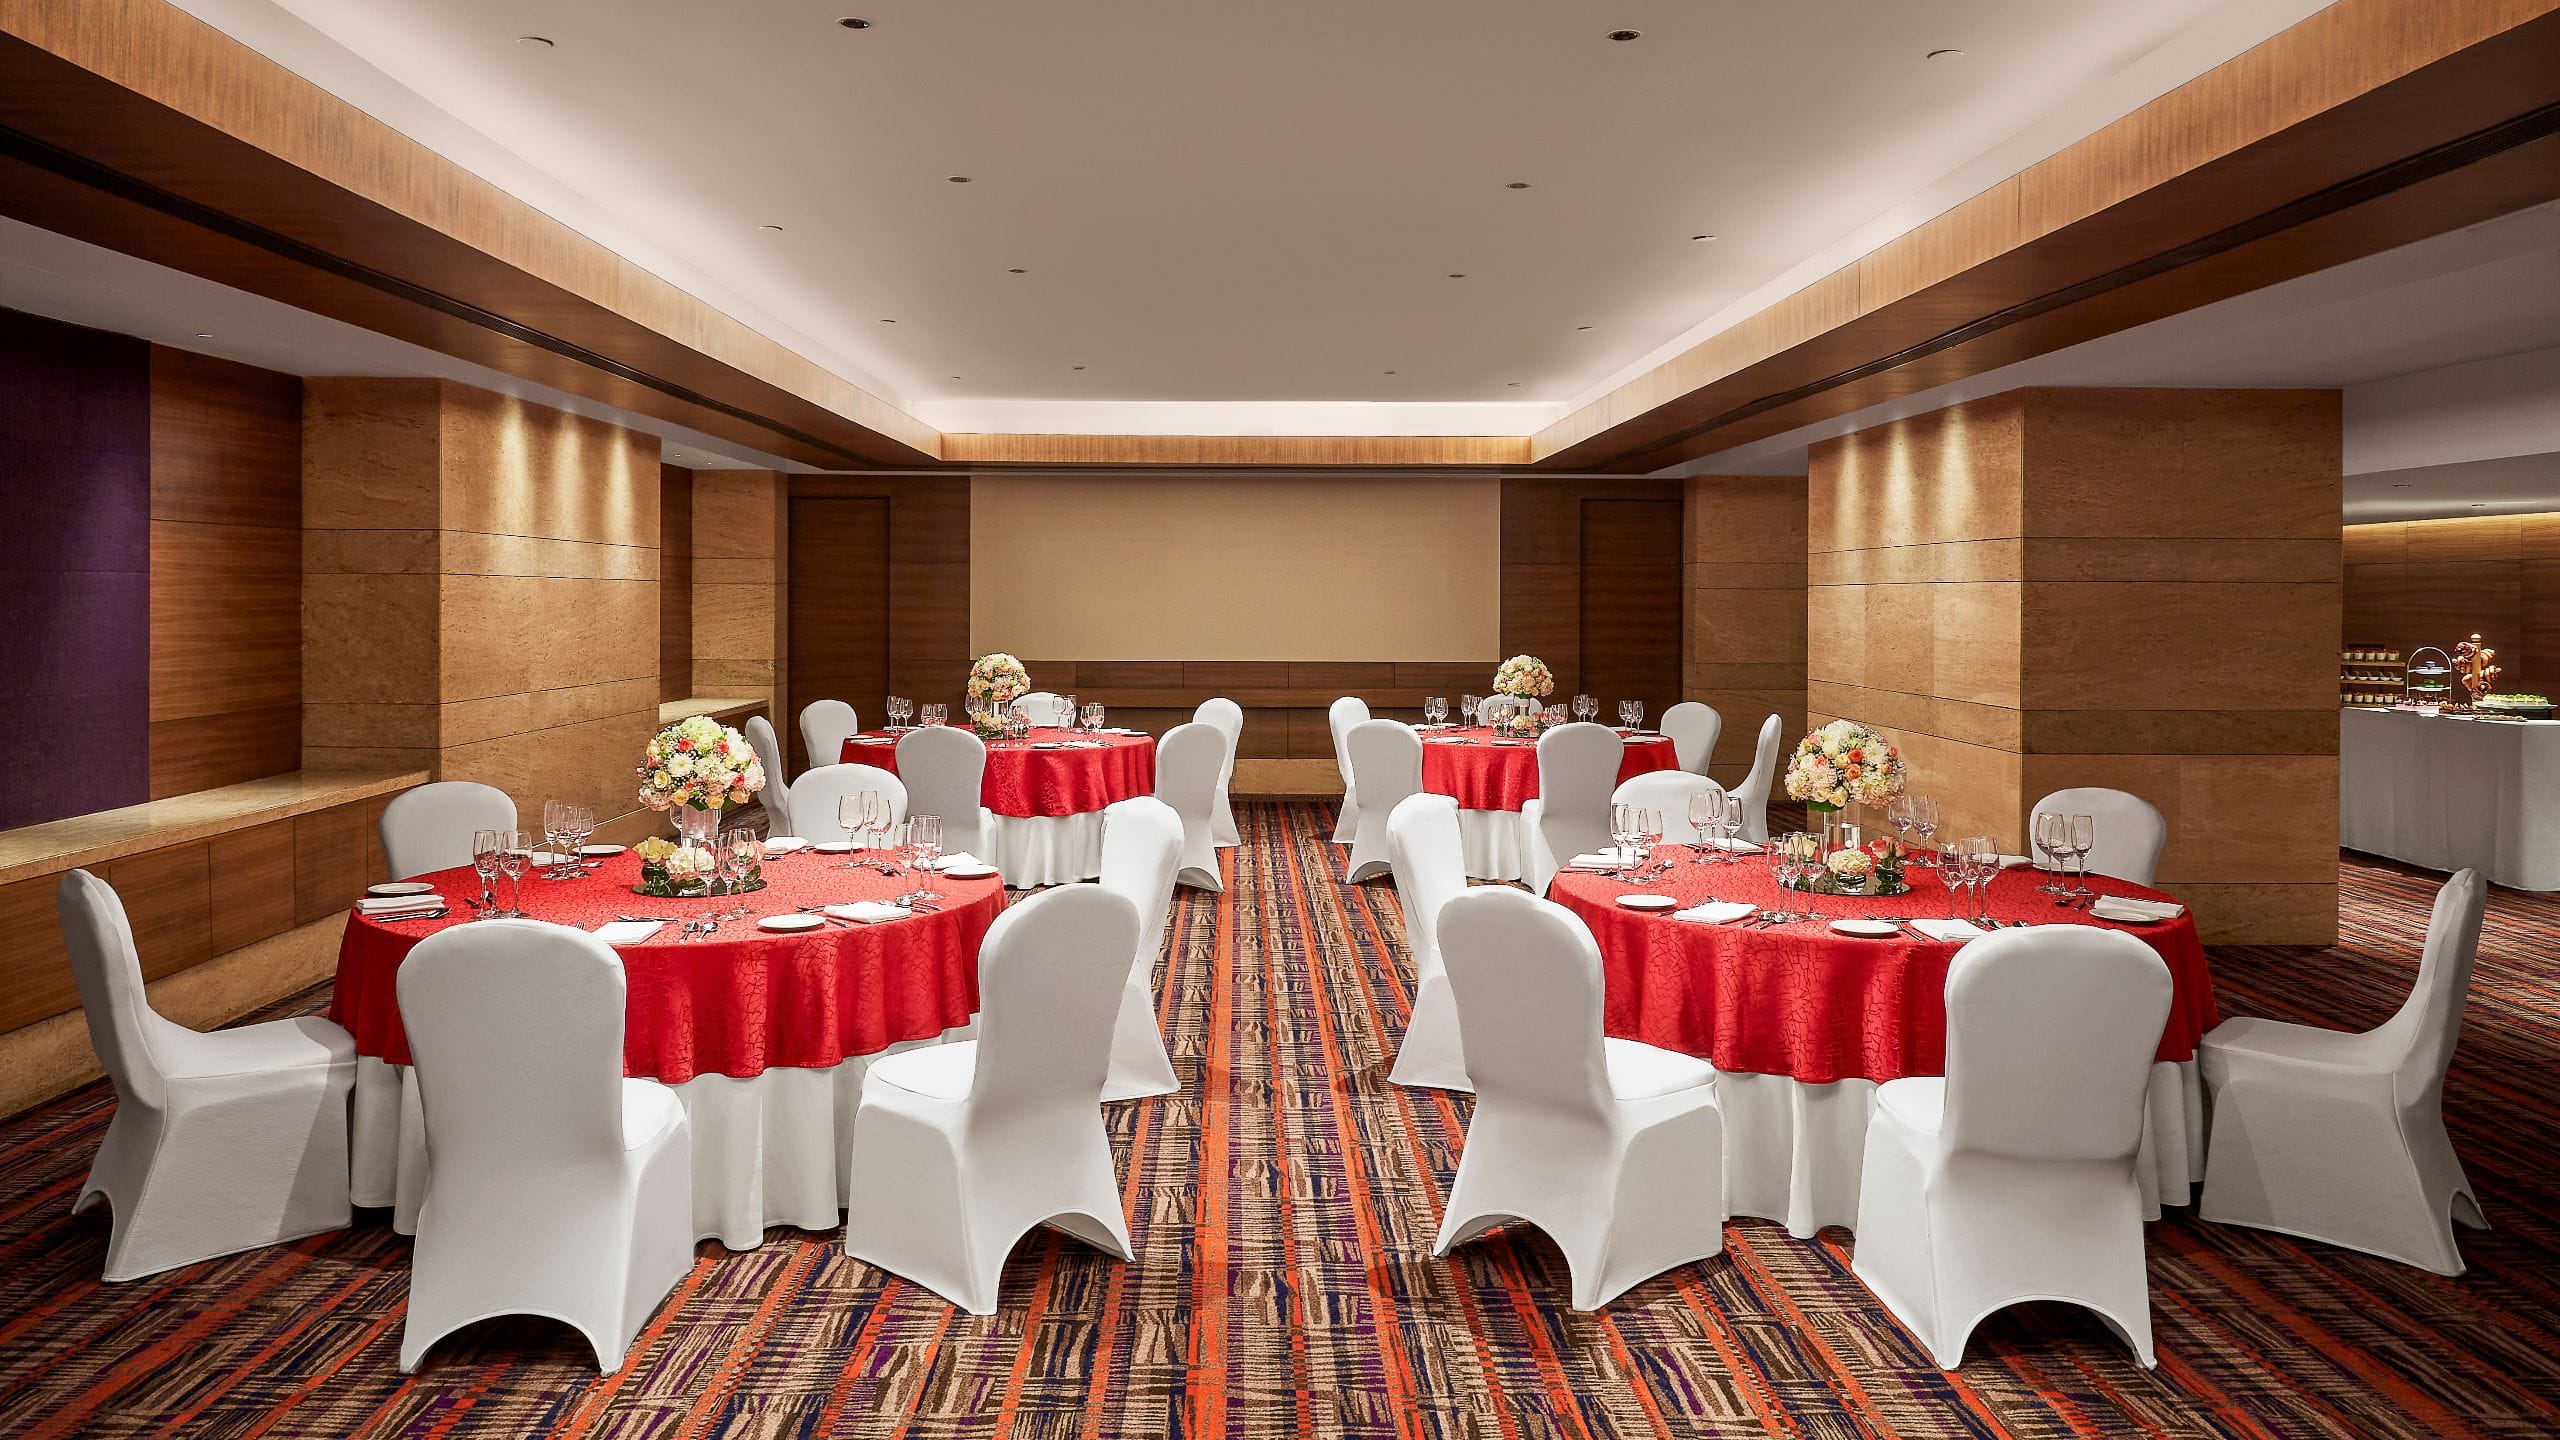 Grand Hyatt Mumbai Hotel & Residences Mahogany Conference Tables Chairs